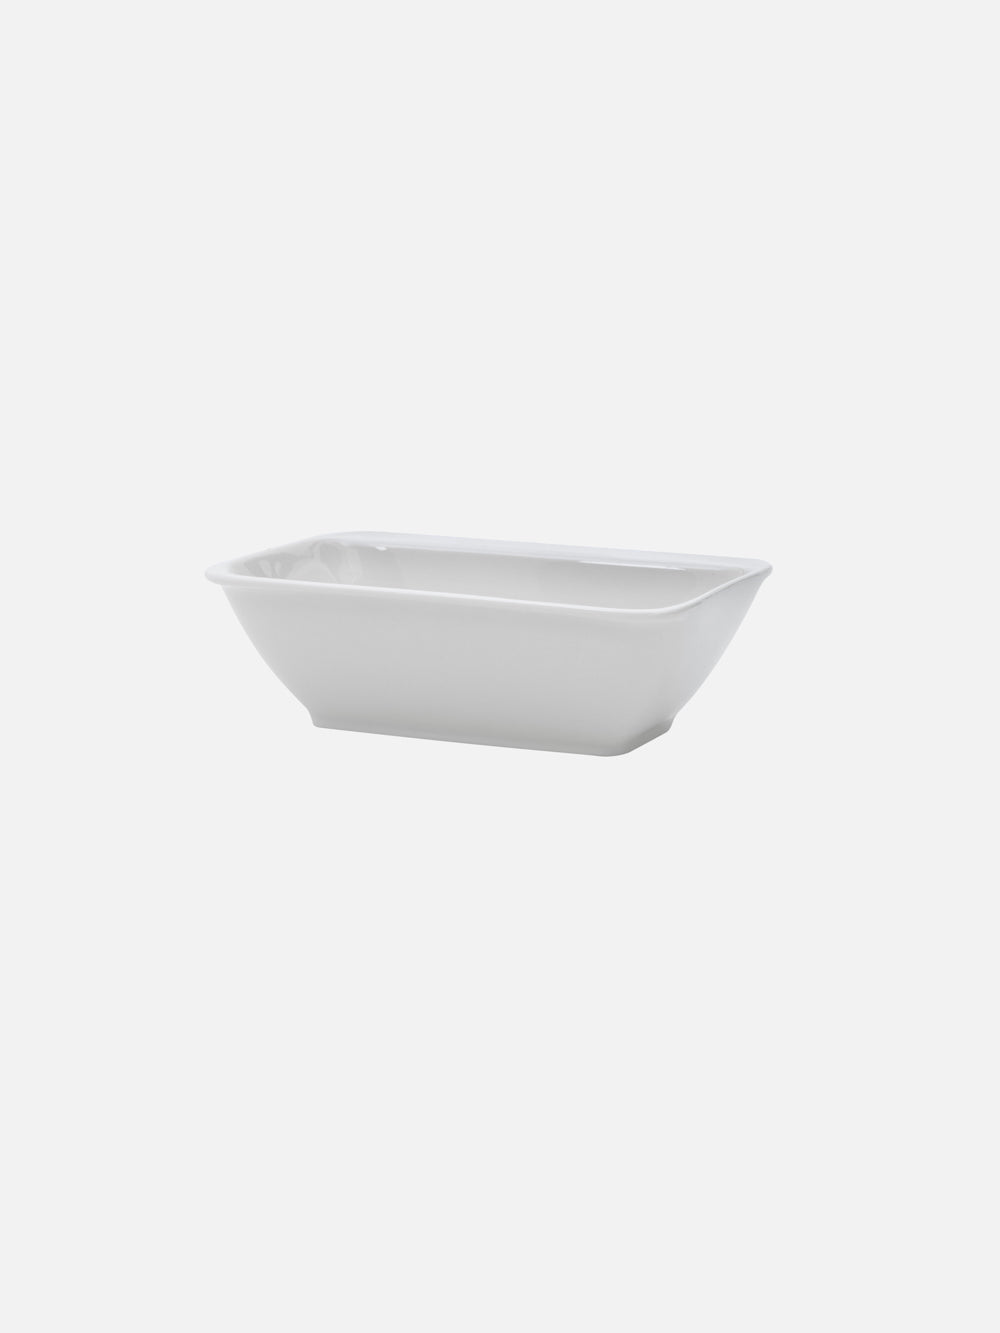 White porcelain square serving bowl